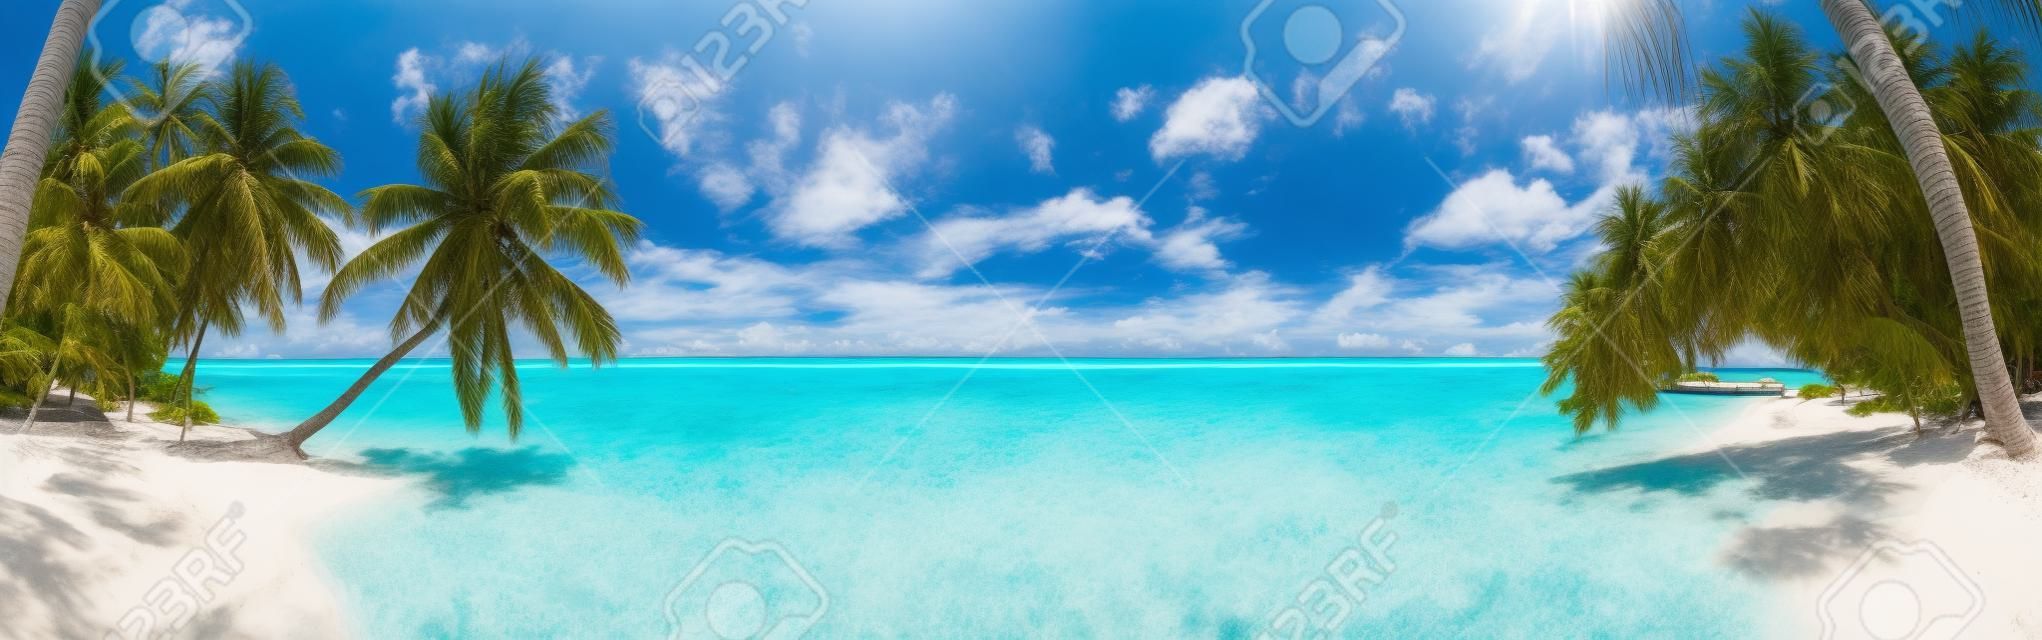 Strand panorama op Malediven met blauwe lucht, palmbomen en turquoise water